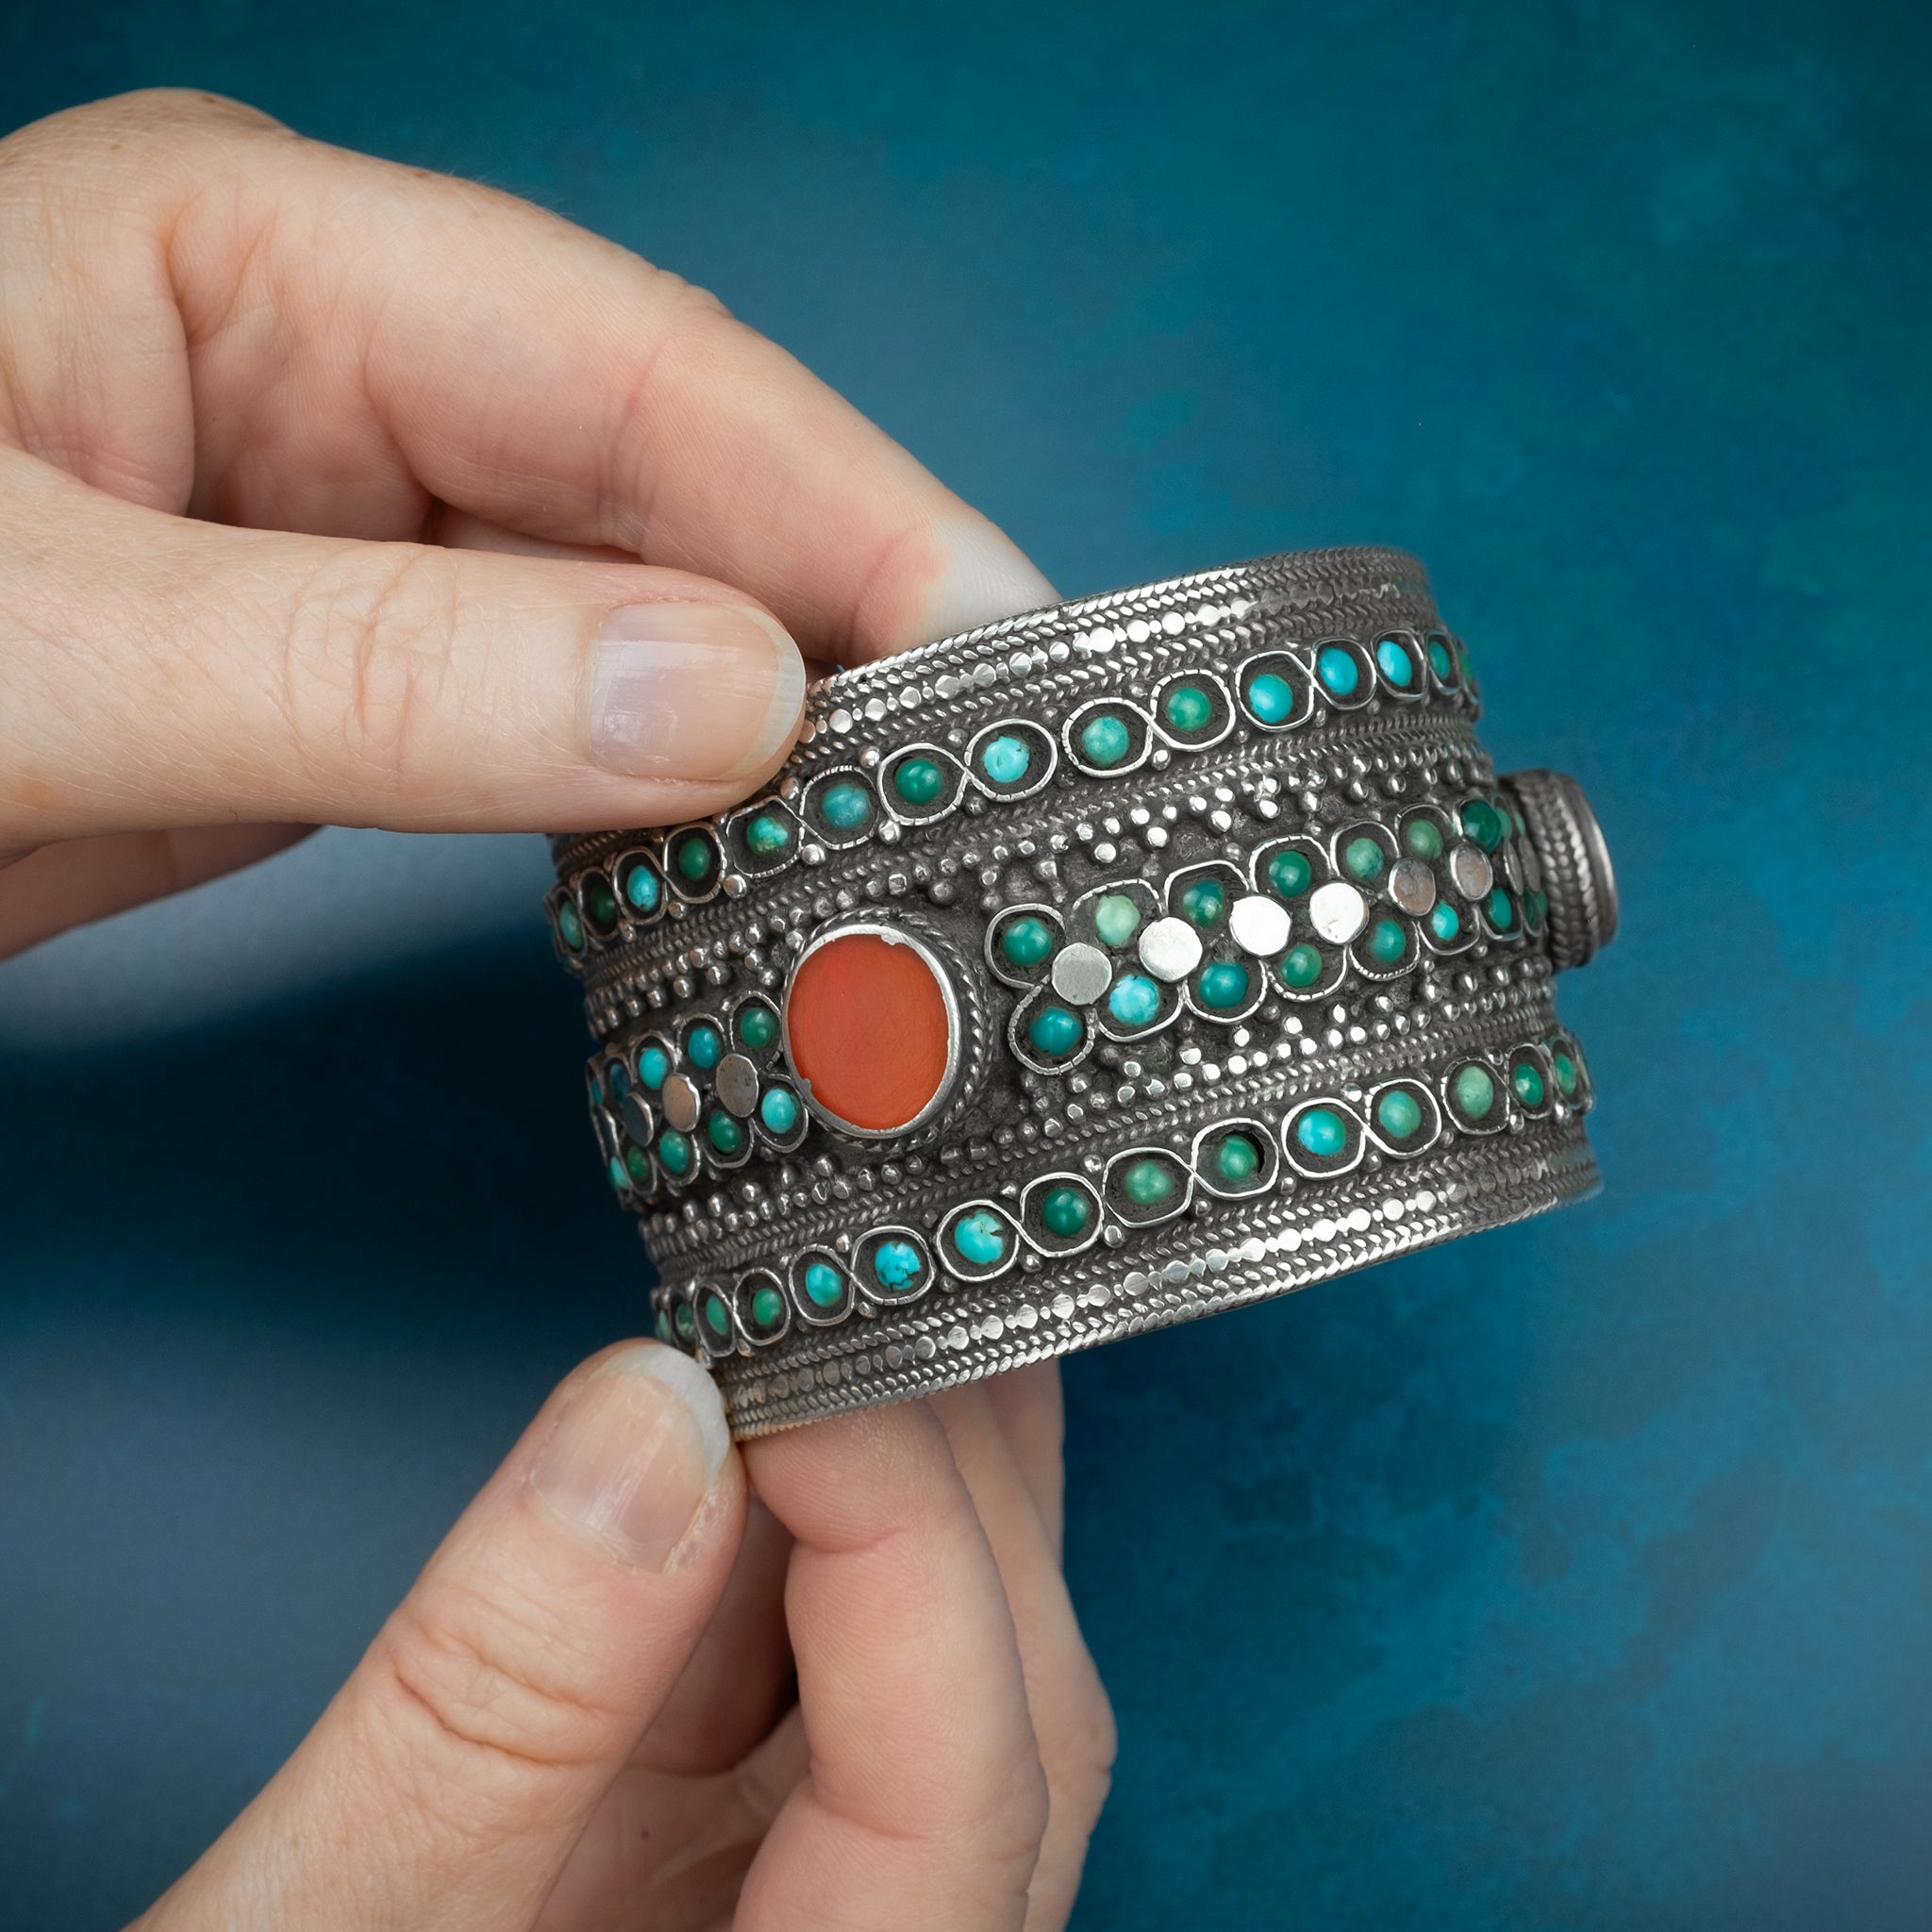 RARE Antique Silver & Turquoise Cuff Bracelet, Bukhara (Uzbekistan)